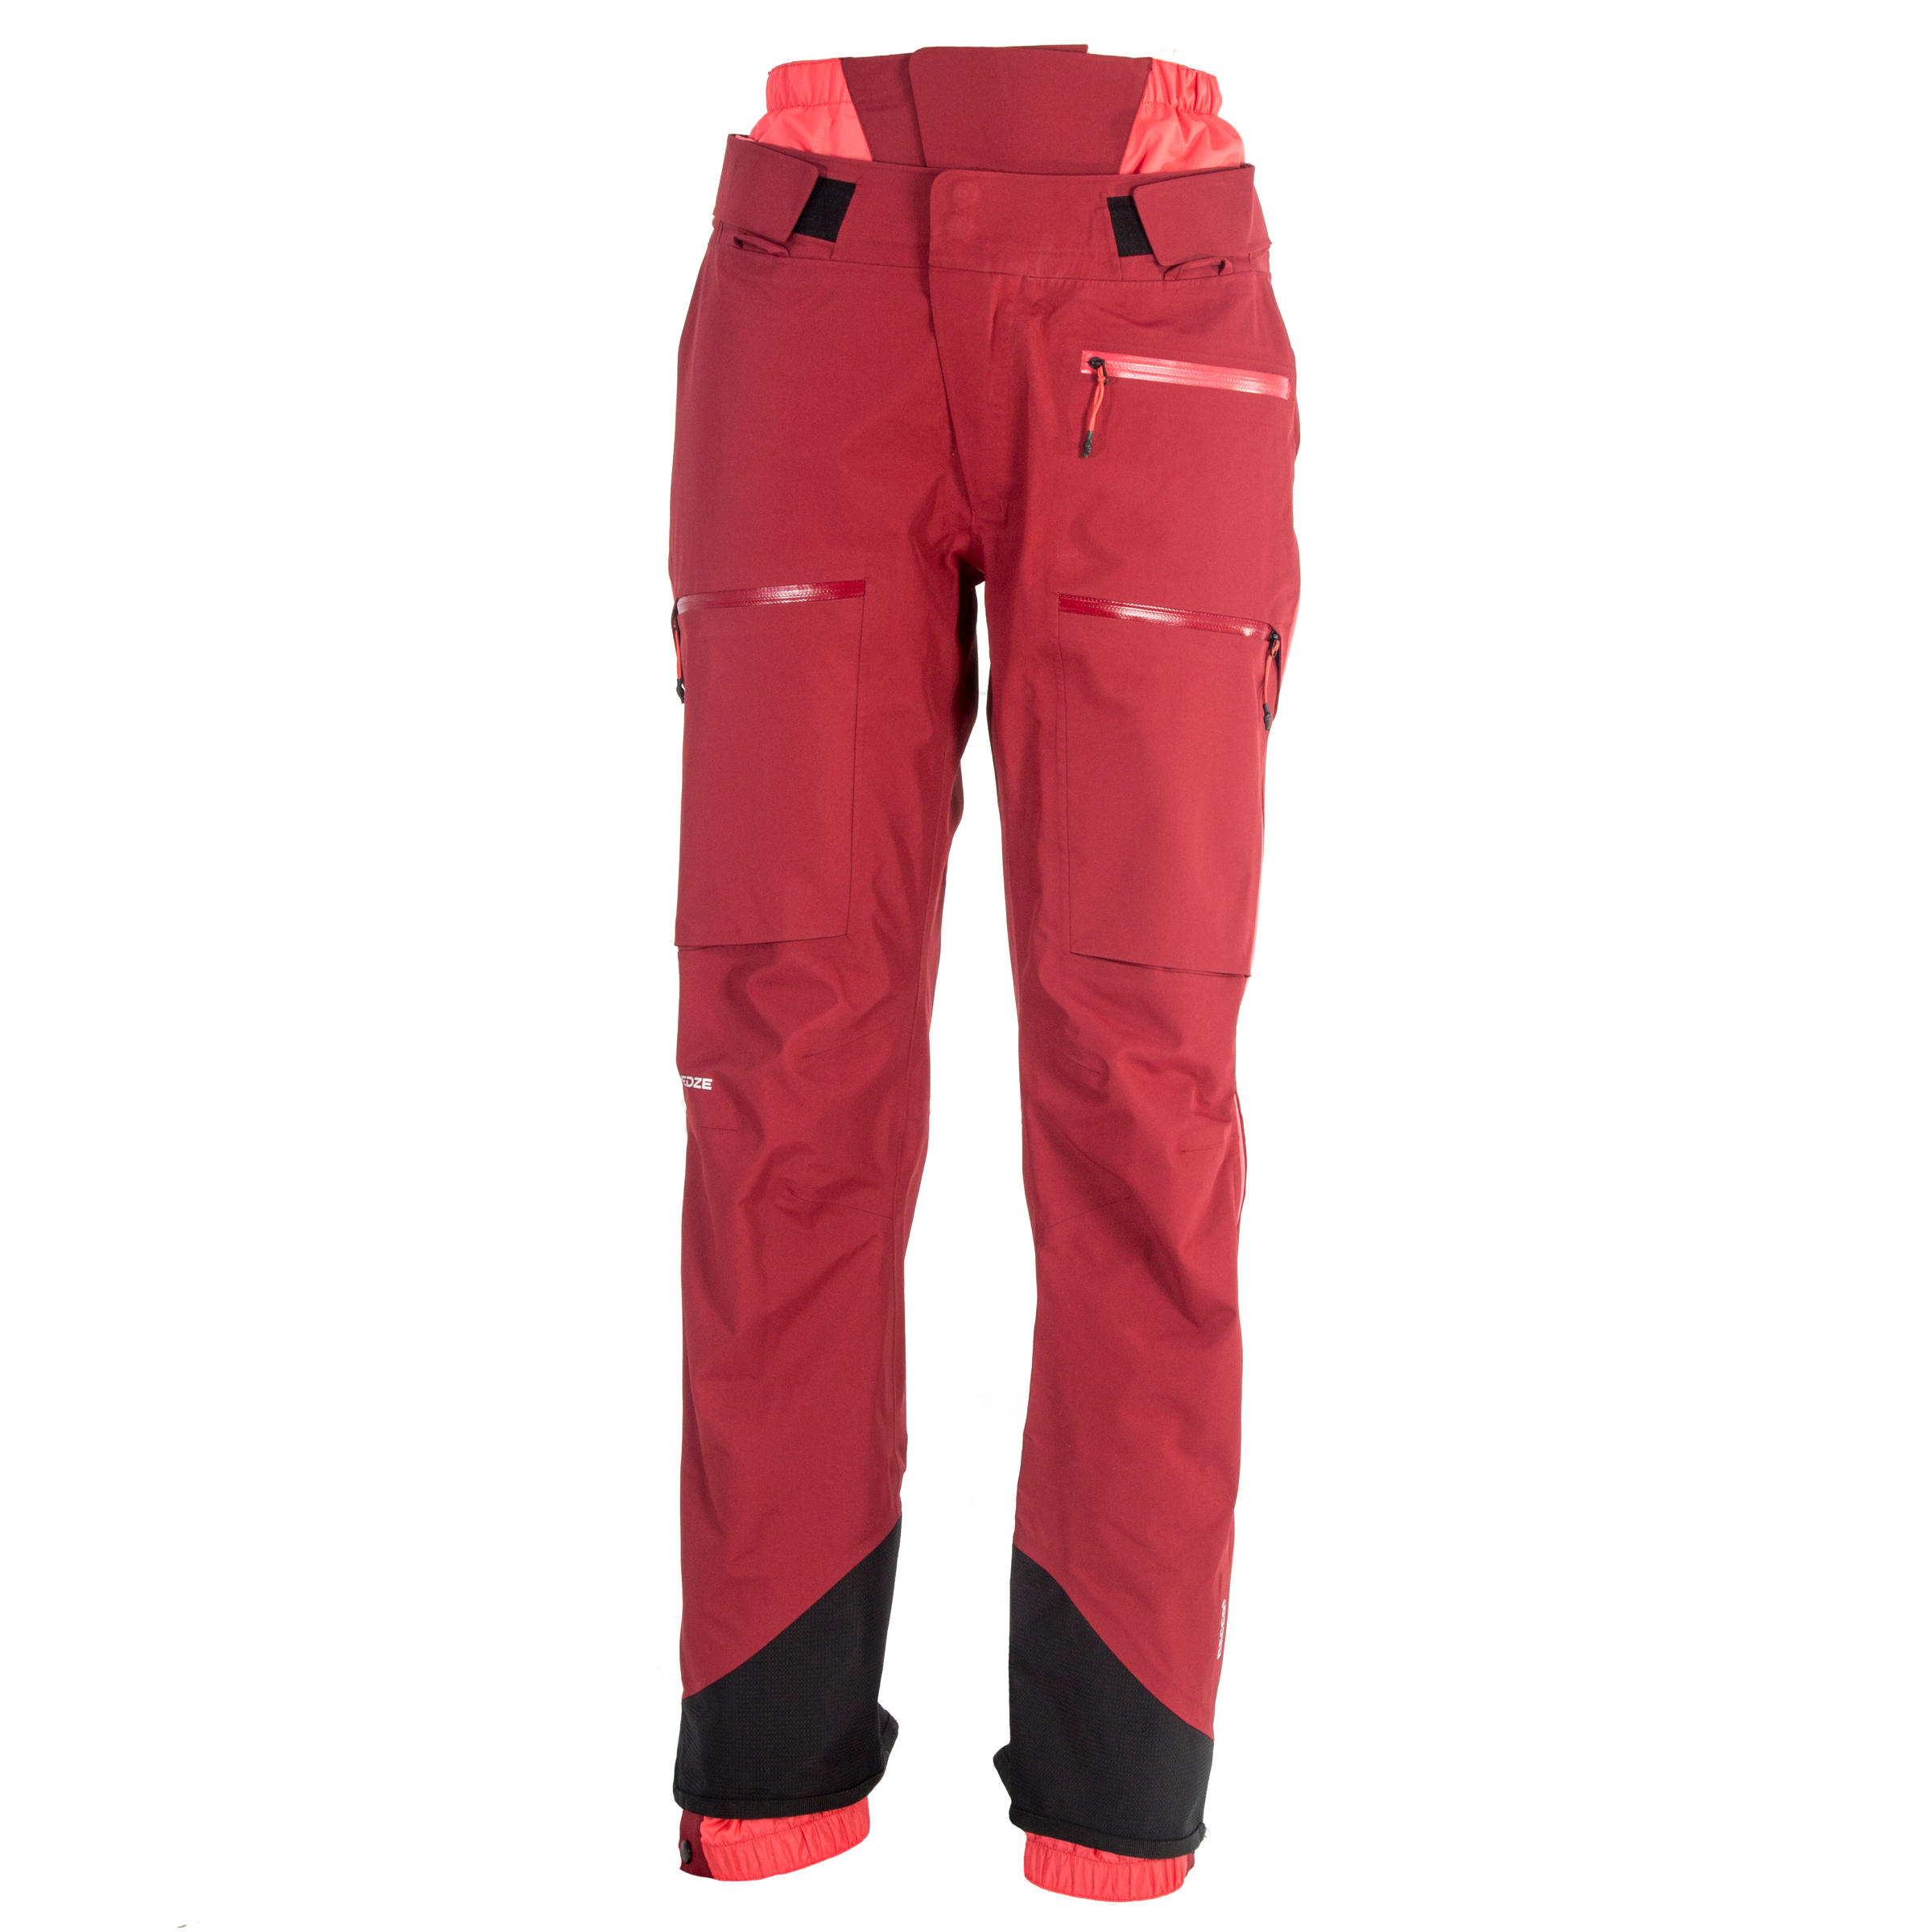 Buy wintersports- / skiing pants online at Sport Conrad